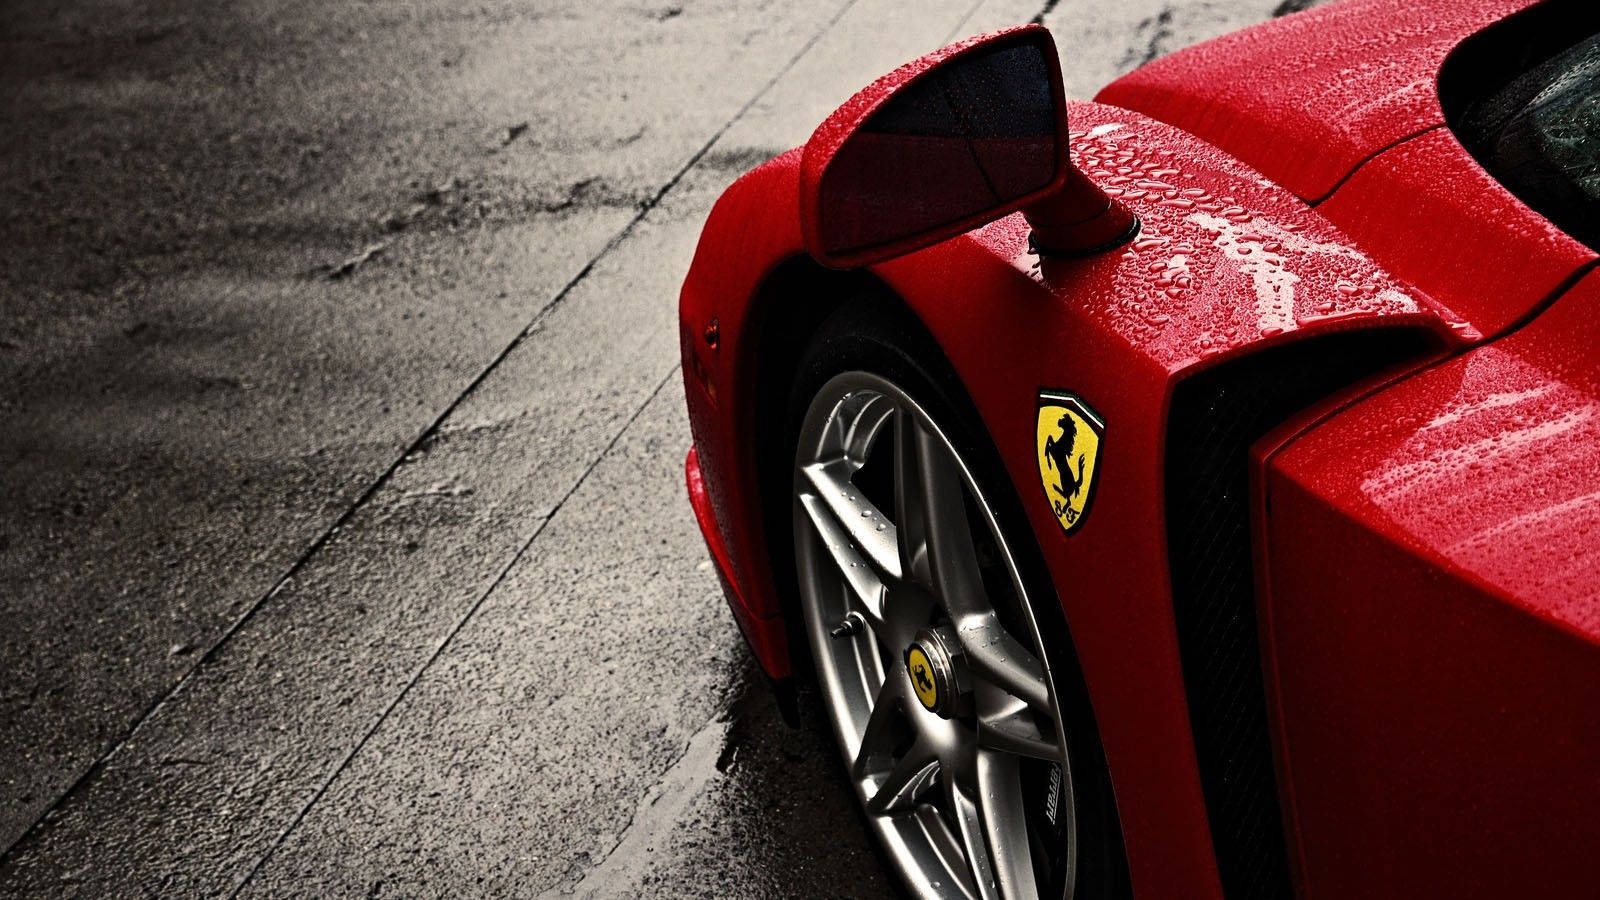 Ferrari Supercar In Rain Wallpaper